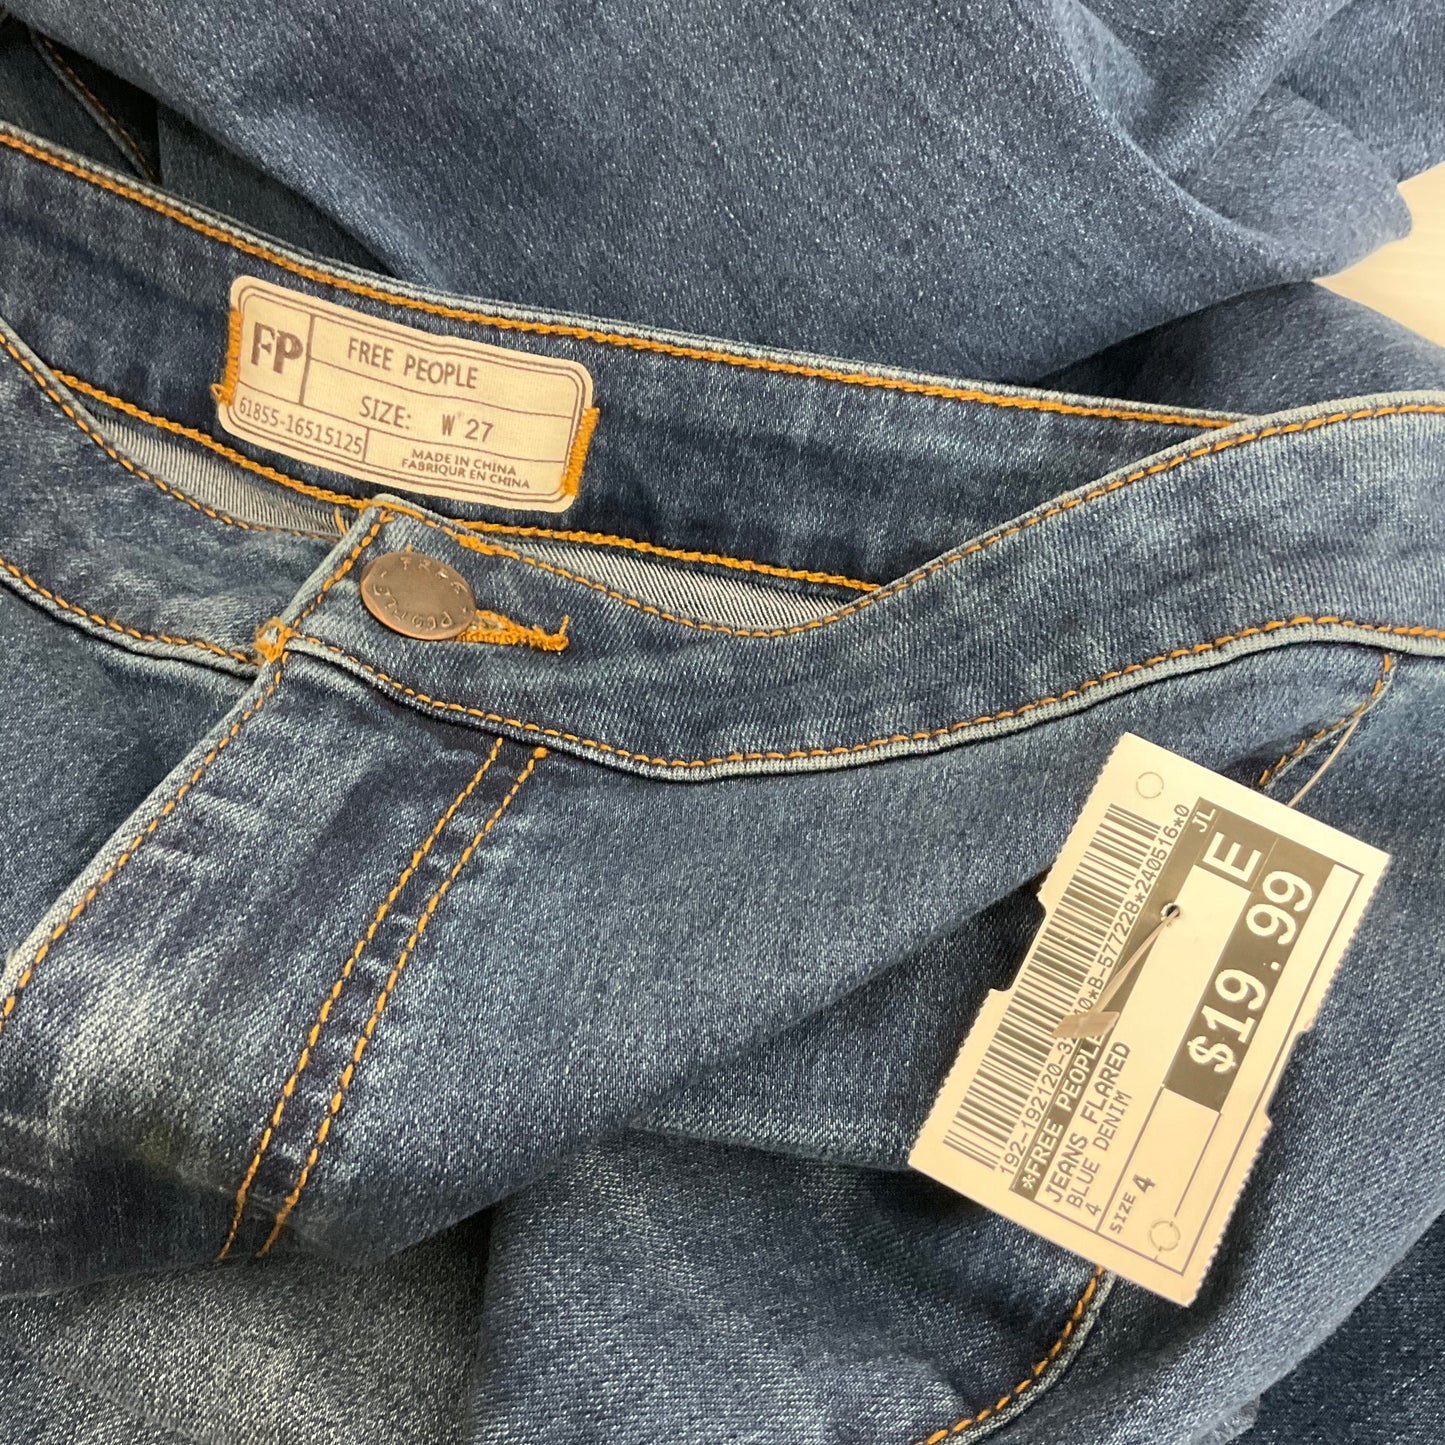 Blue Denim Jeans Flared Free People, Size 4